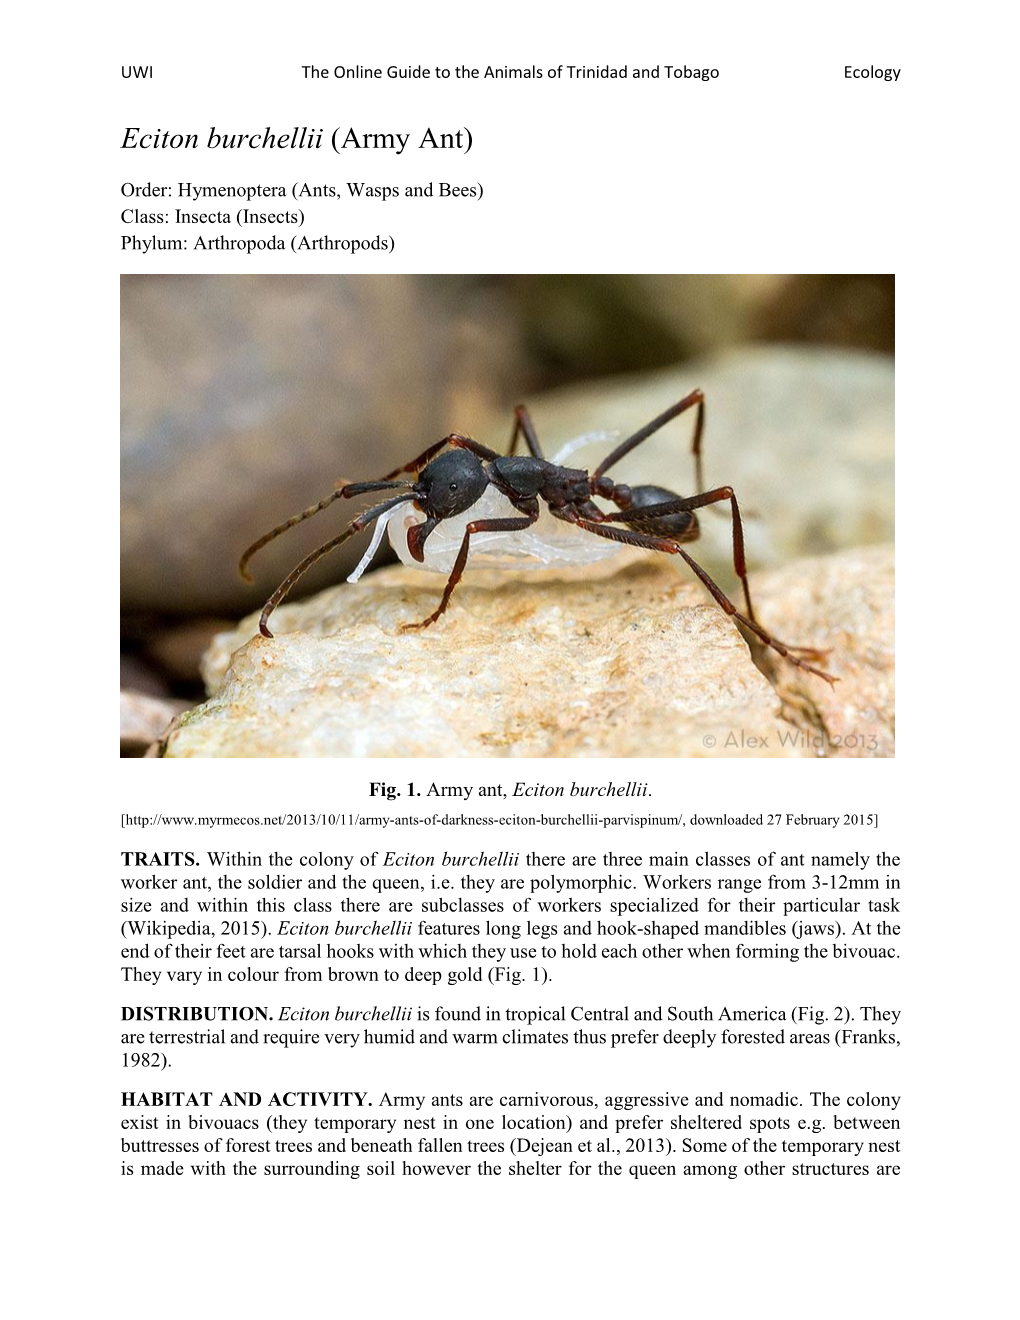 Eciton Burchellii (Army Ant)